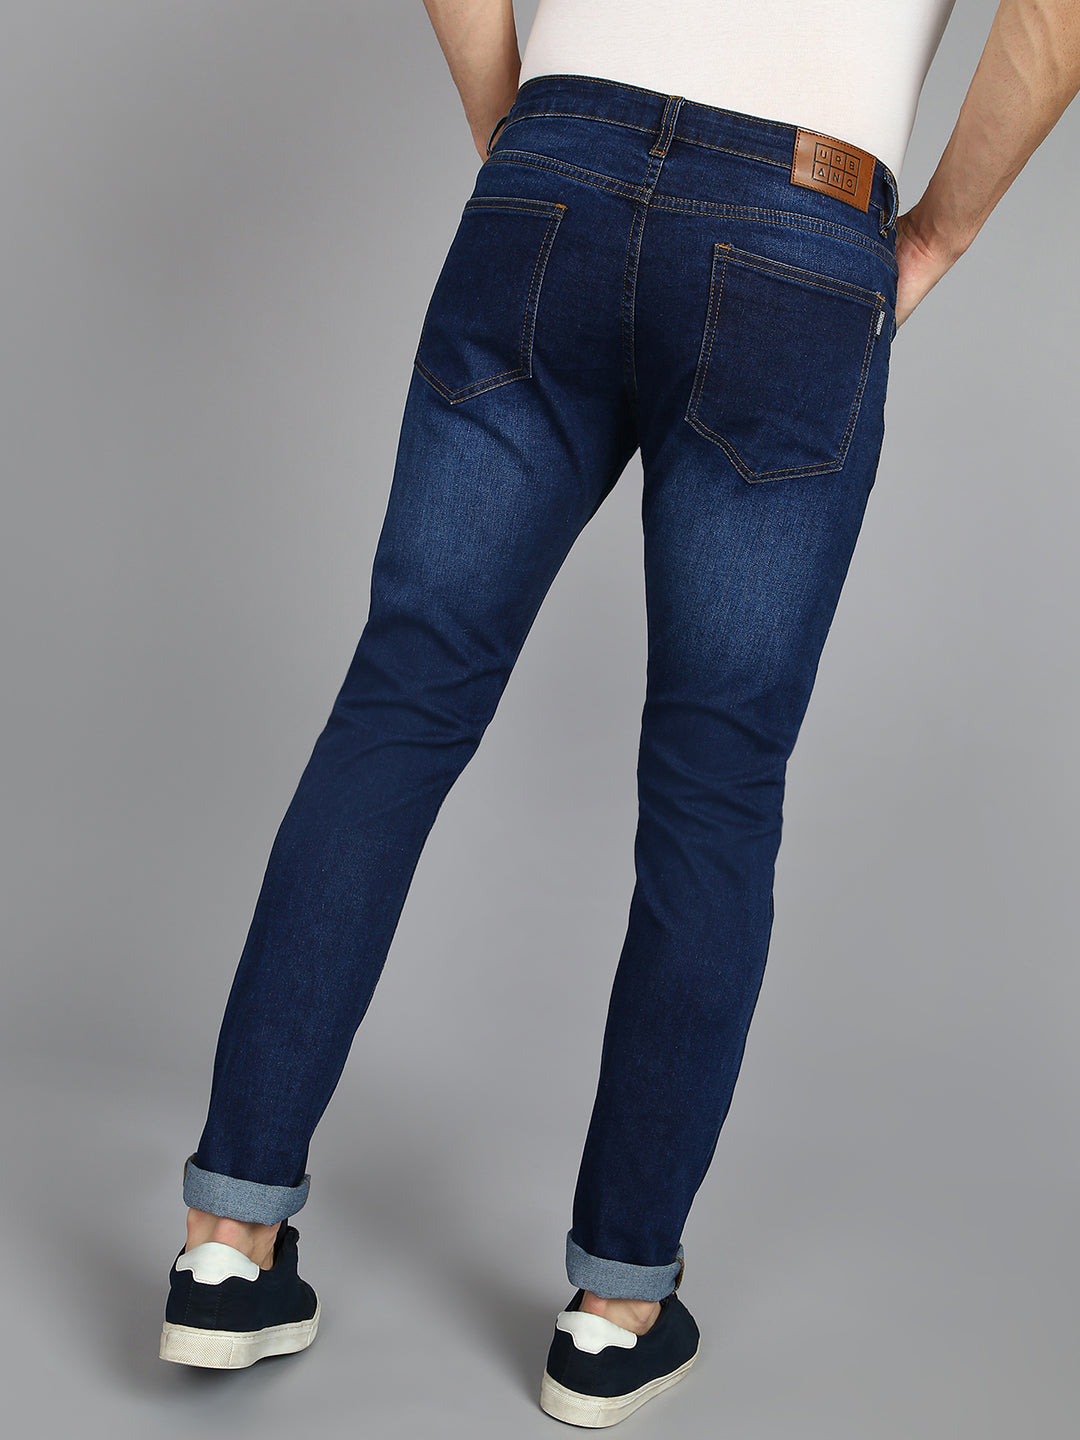 Urbano Fashion Men's Blue Slim Fit Washed Mild Distressed Jeans Stretch